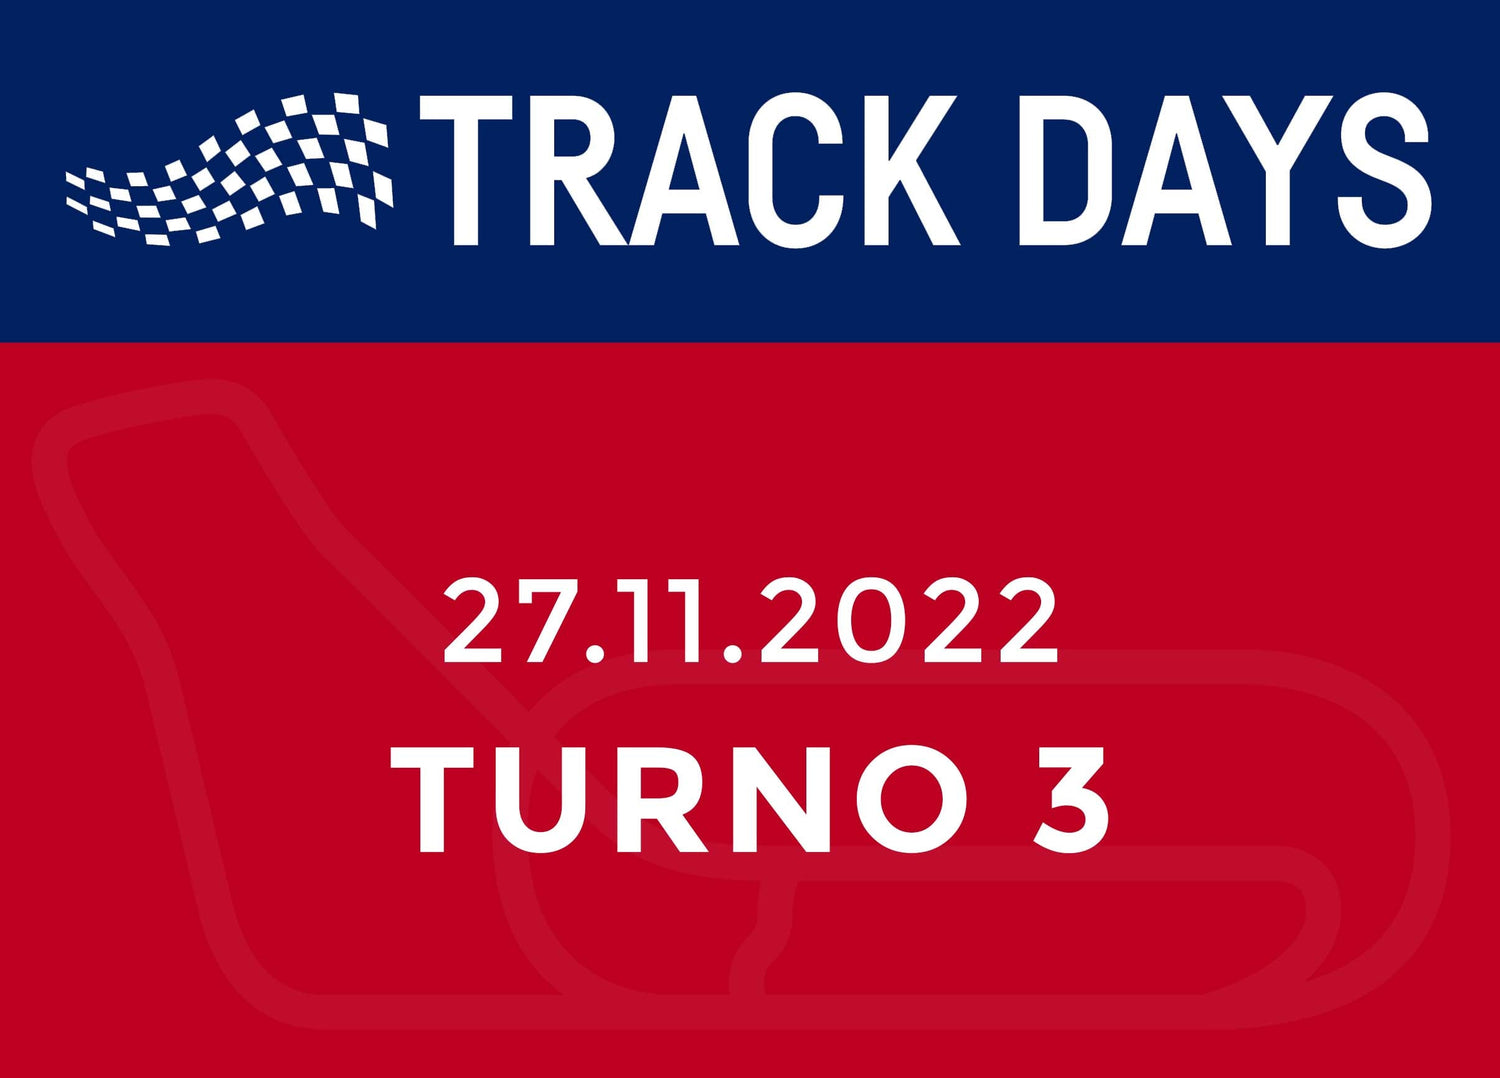 TRACK DAYS 27.11.22 TURNO 3